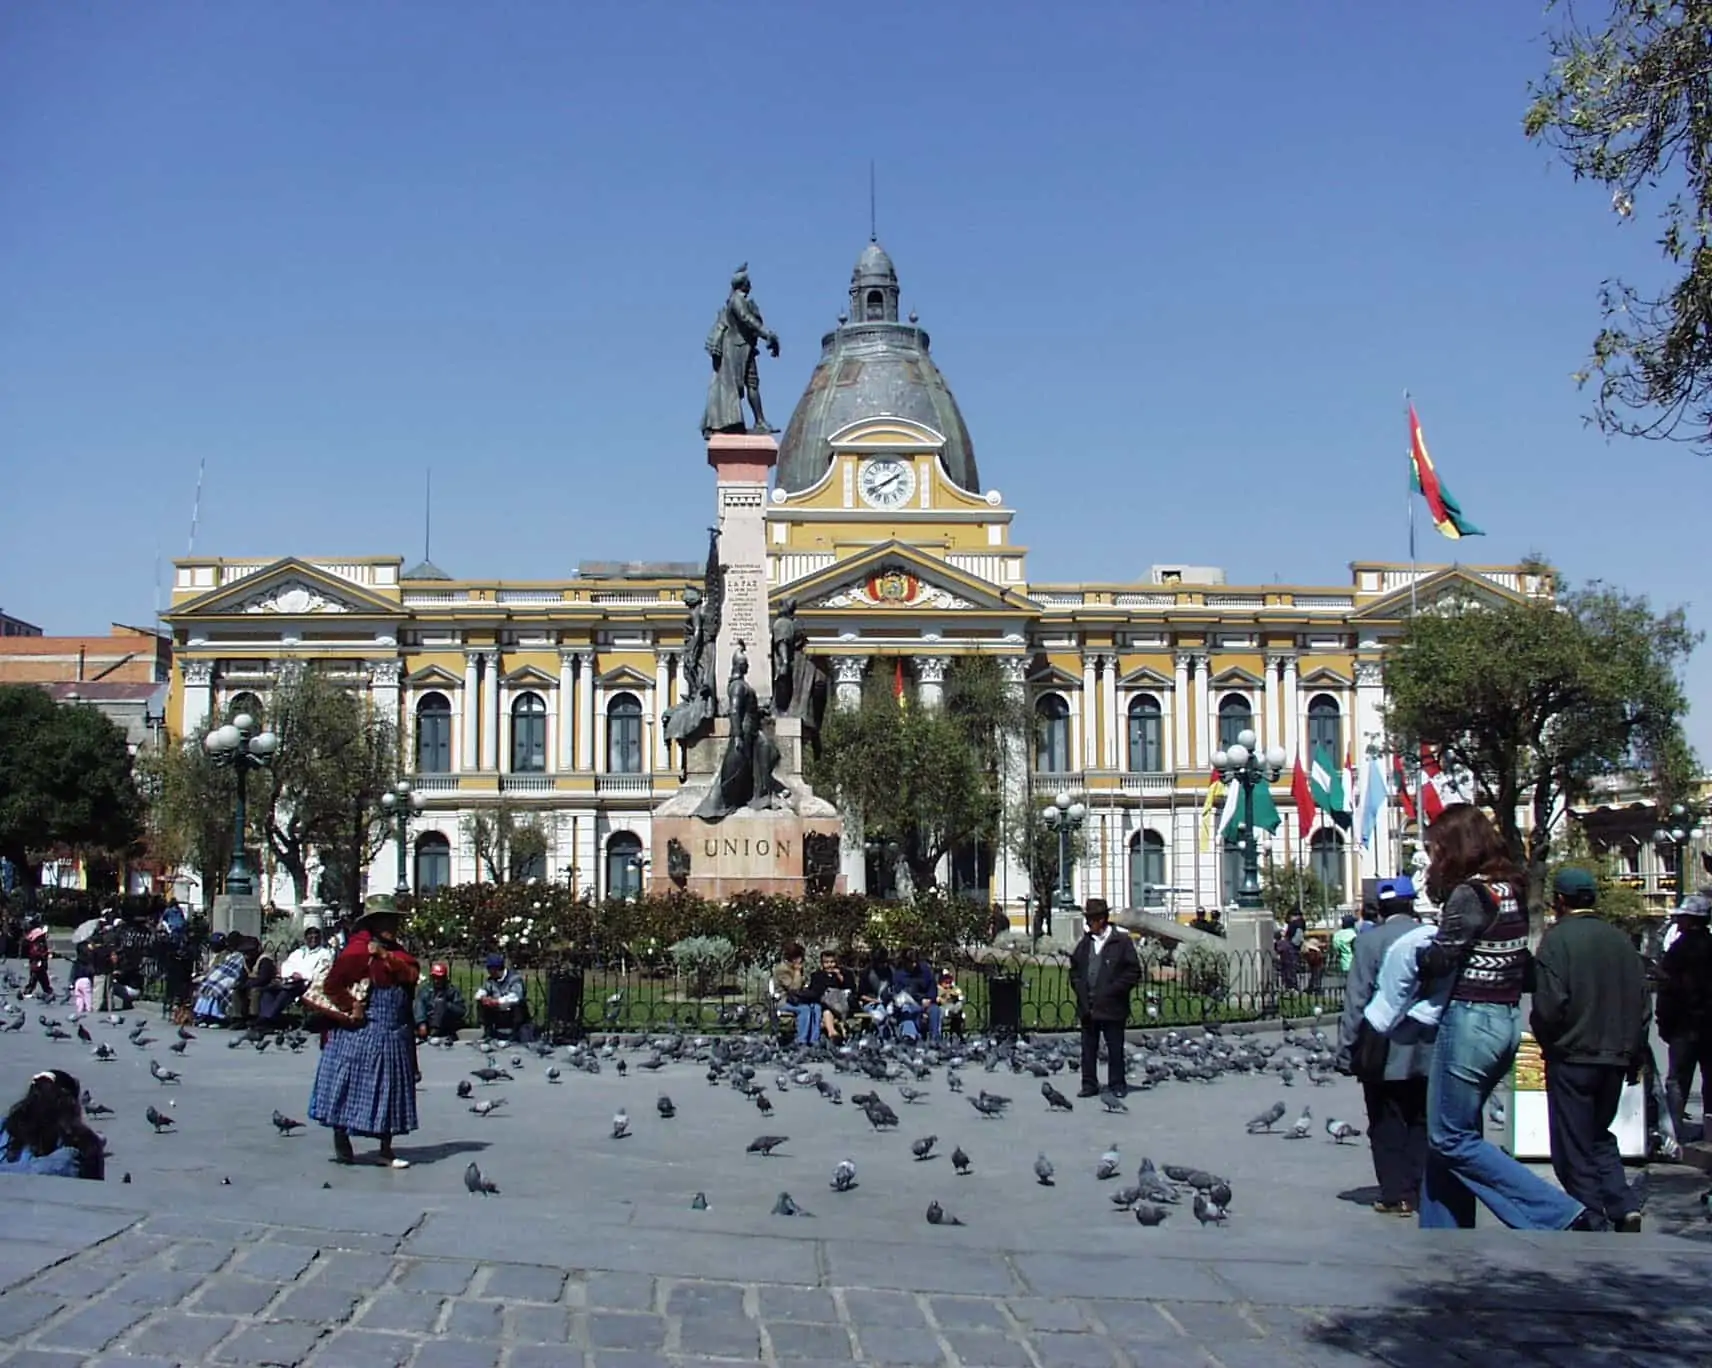 Bolivia's plurinational legislative assembly